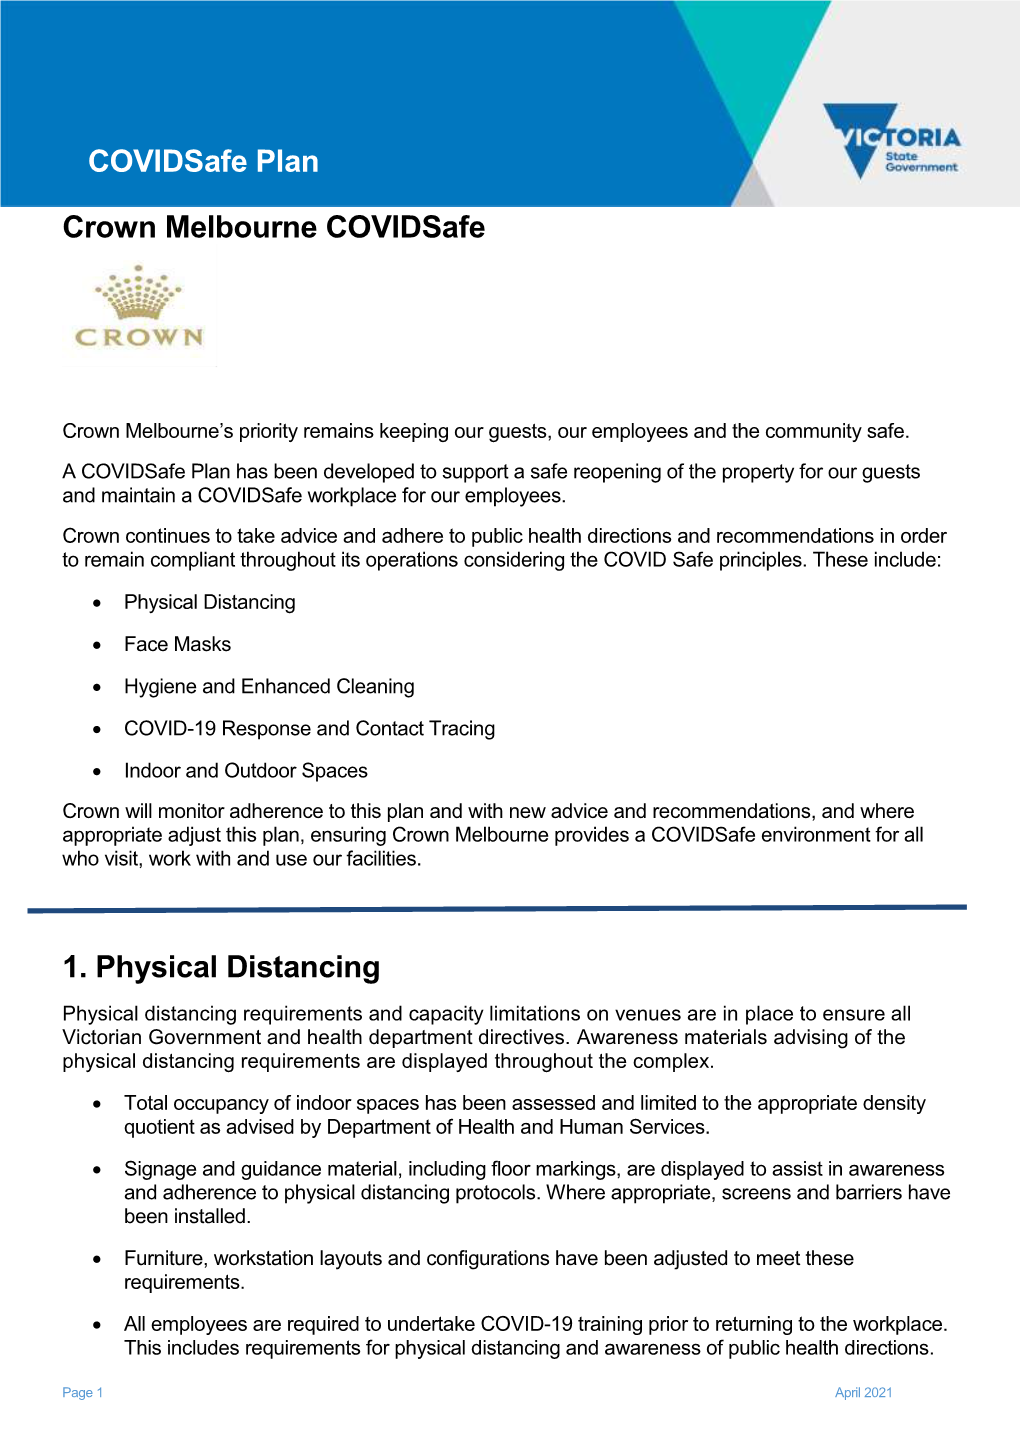 Crown Melbourne Covidsafe Plan 2021